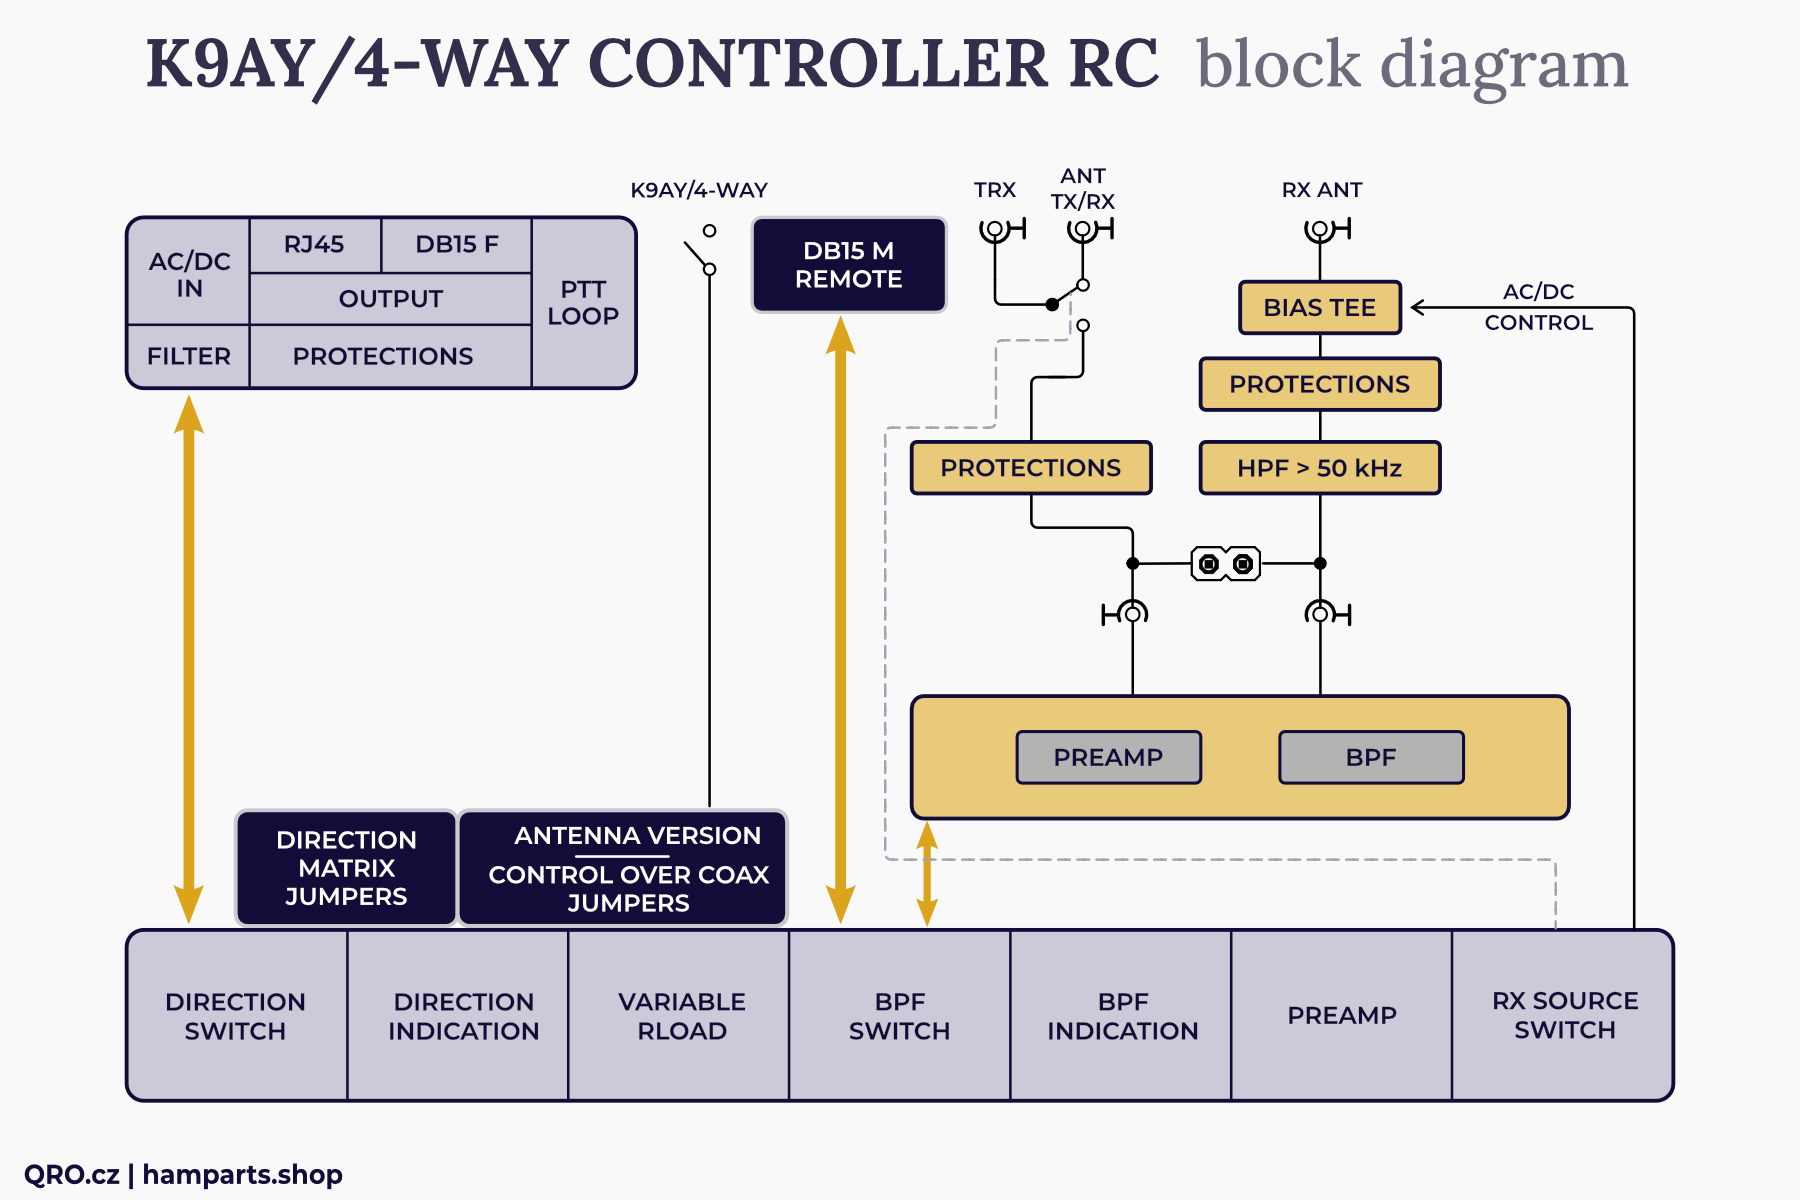 k9ay/4-way antenna switch controller block diagram remote version qro.cz hamparts.shop